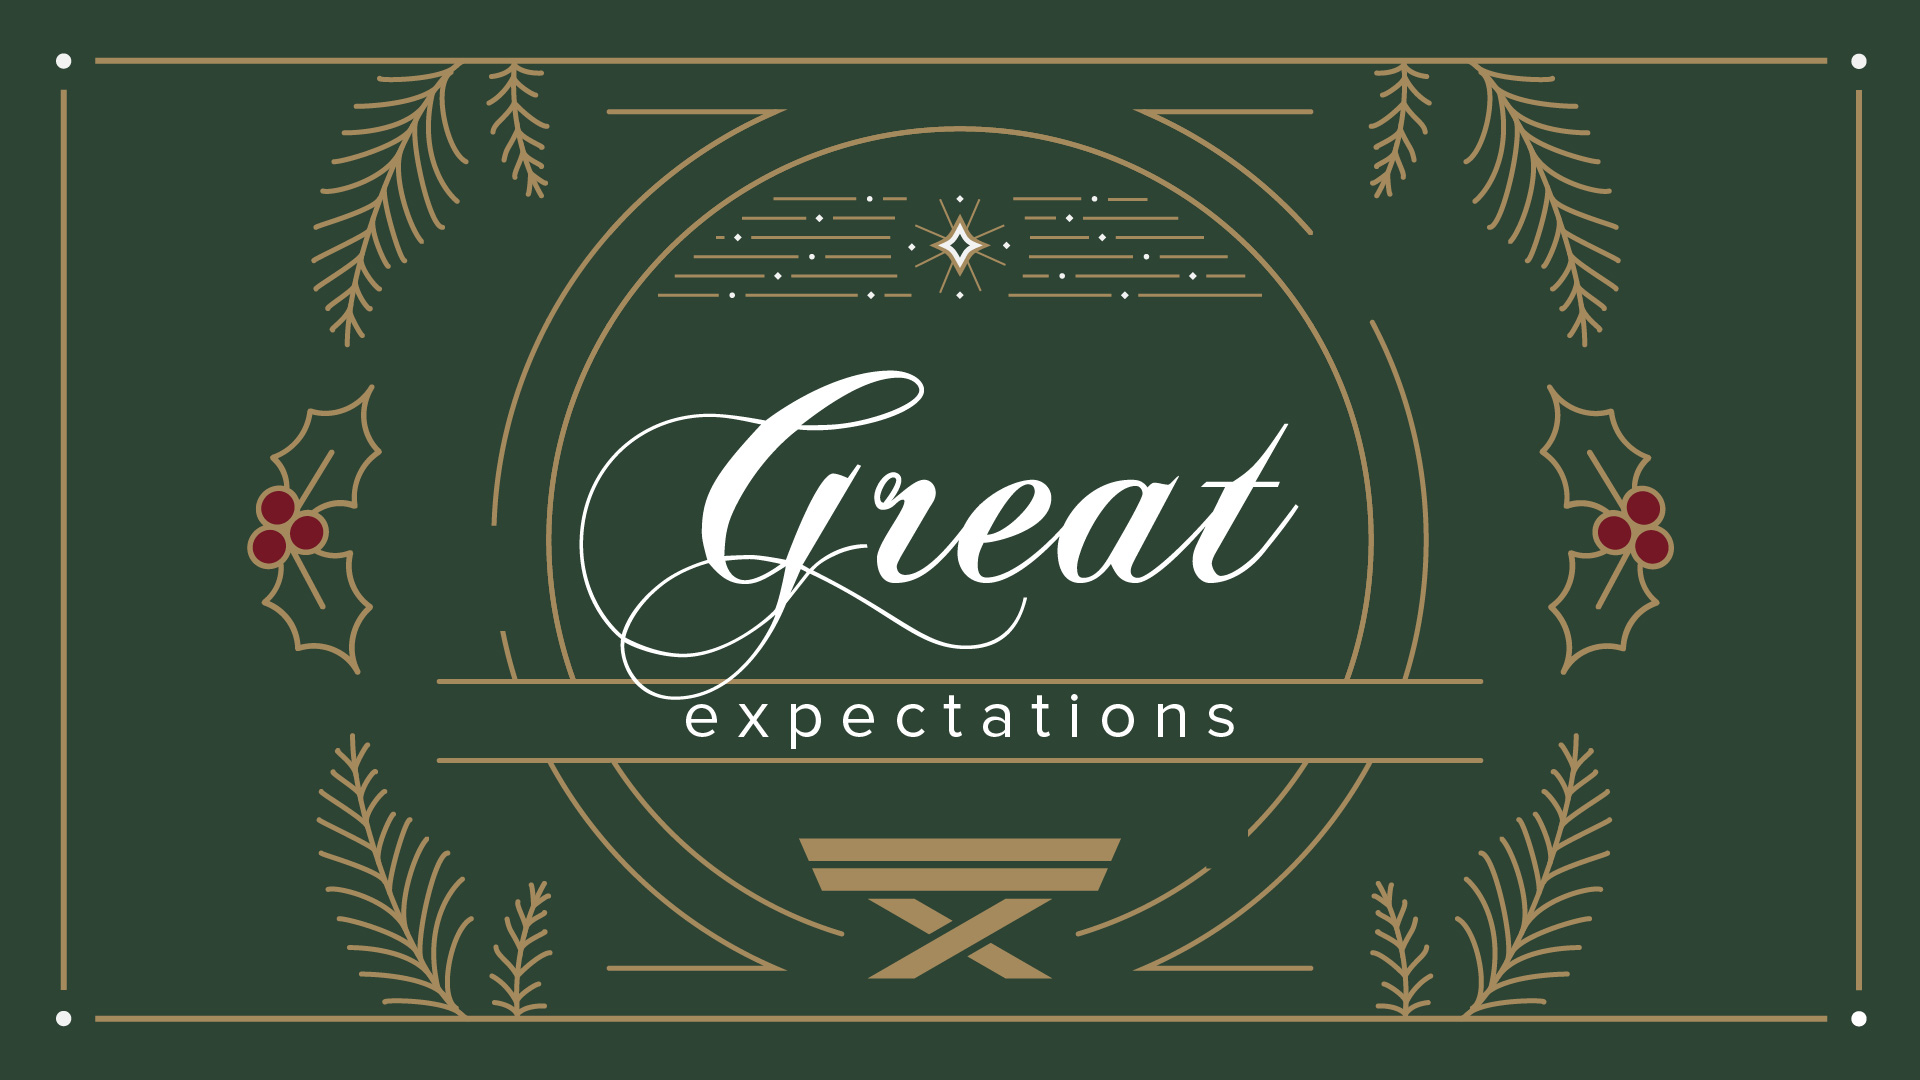 GreatExpectations_script-01